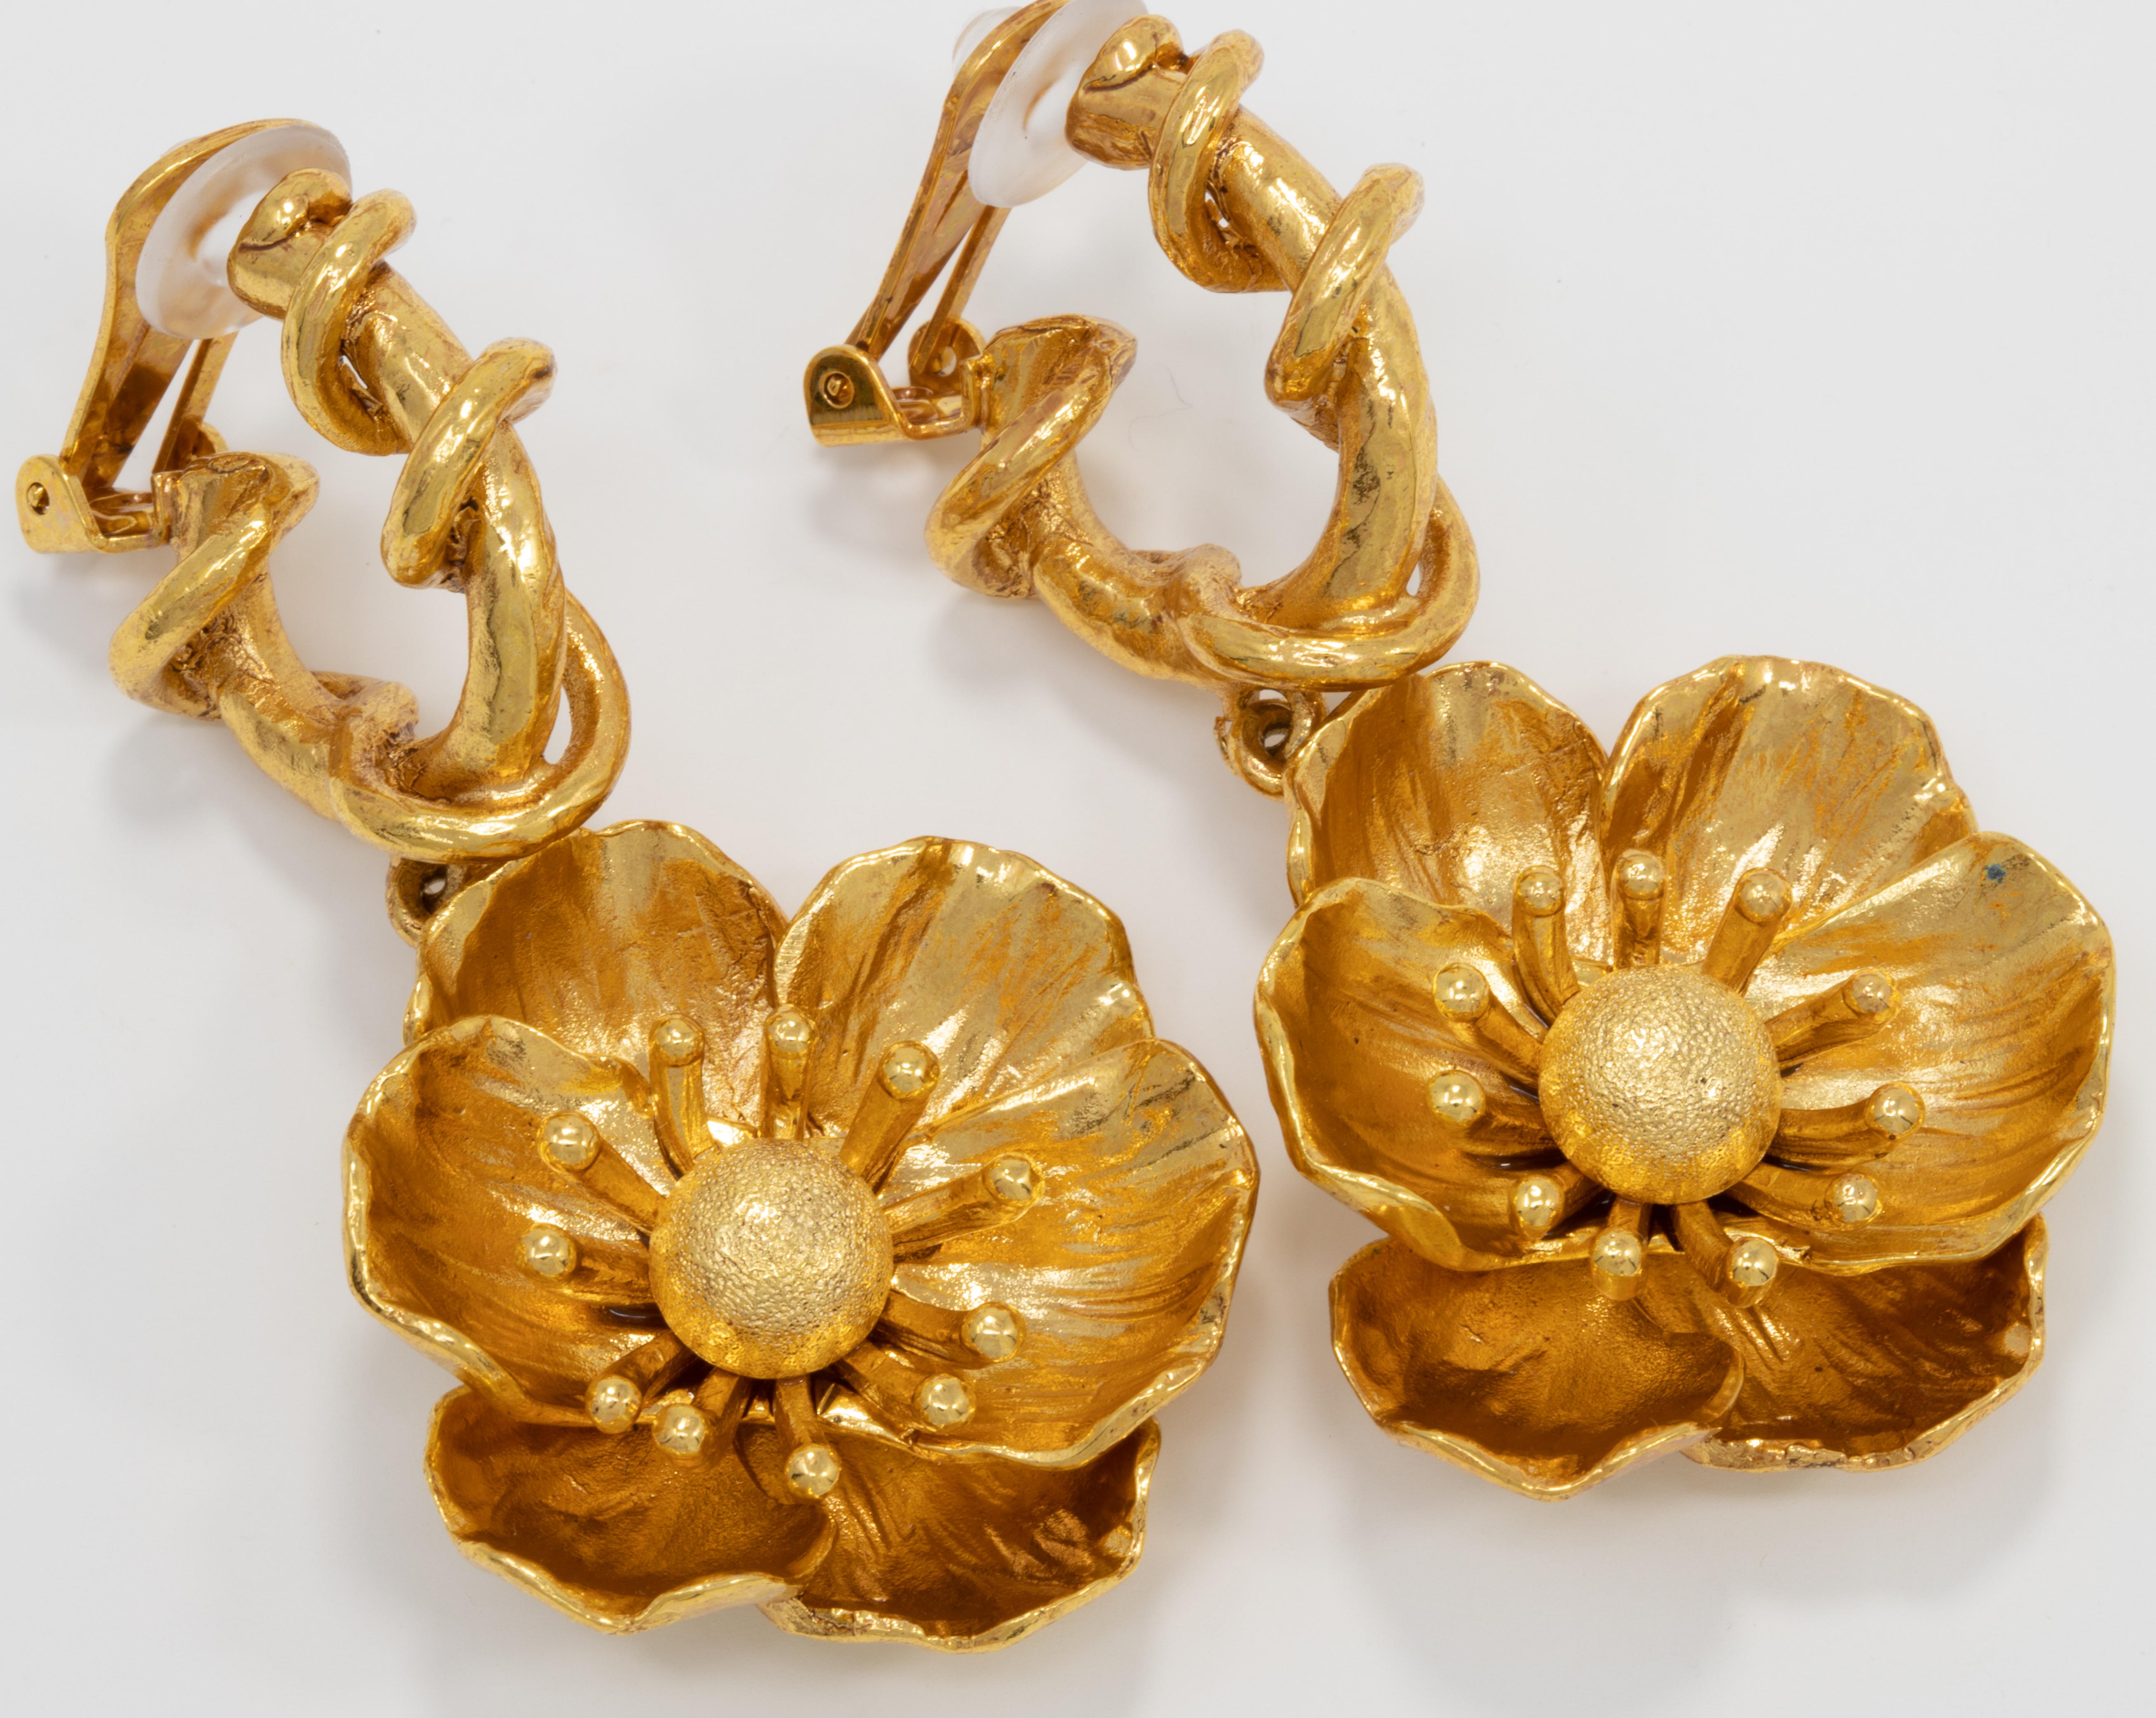 Poppy flower dangle clip on earrings by Oscar de la Renta. Poppy silhouette with brushed golden finish.

Gold-plated.

Tags, Marks, Hallmarks: Oscar de la Renta, Made in USA
